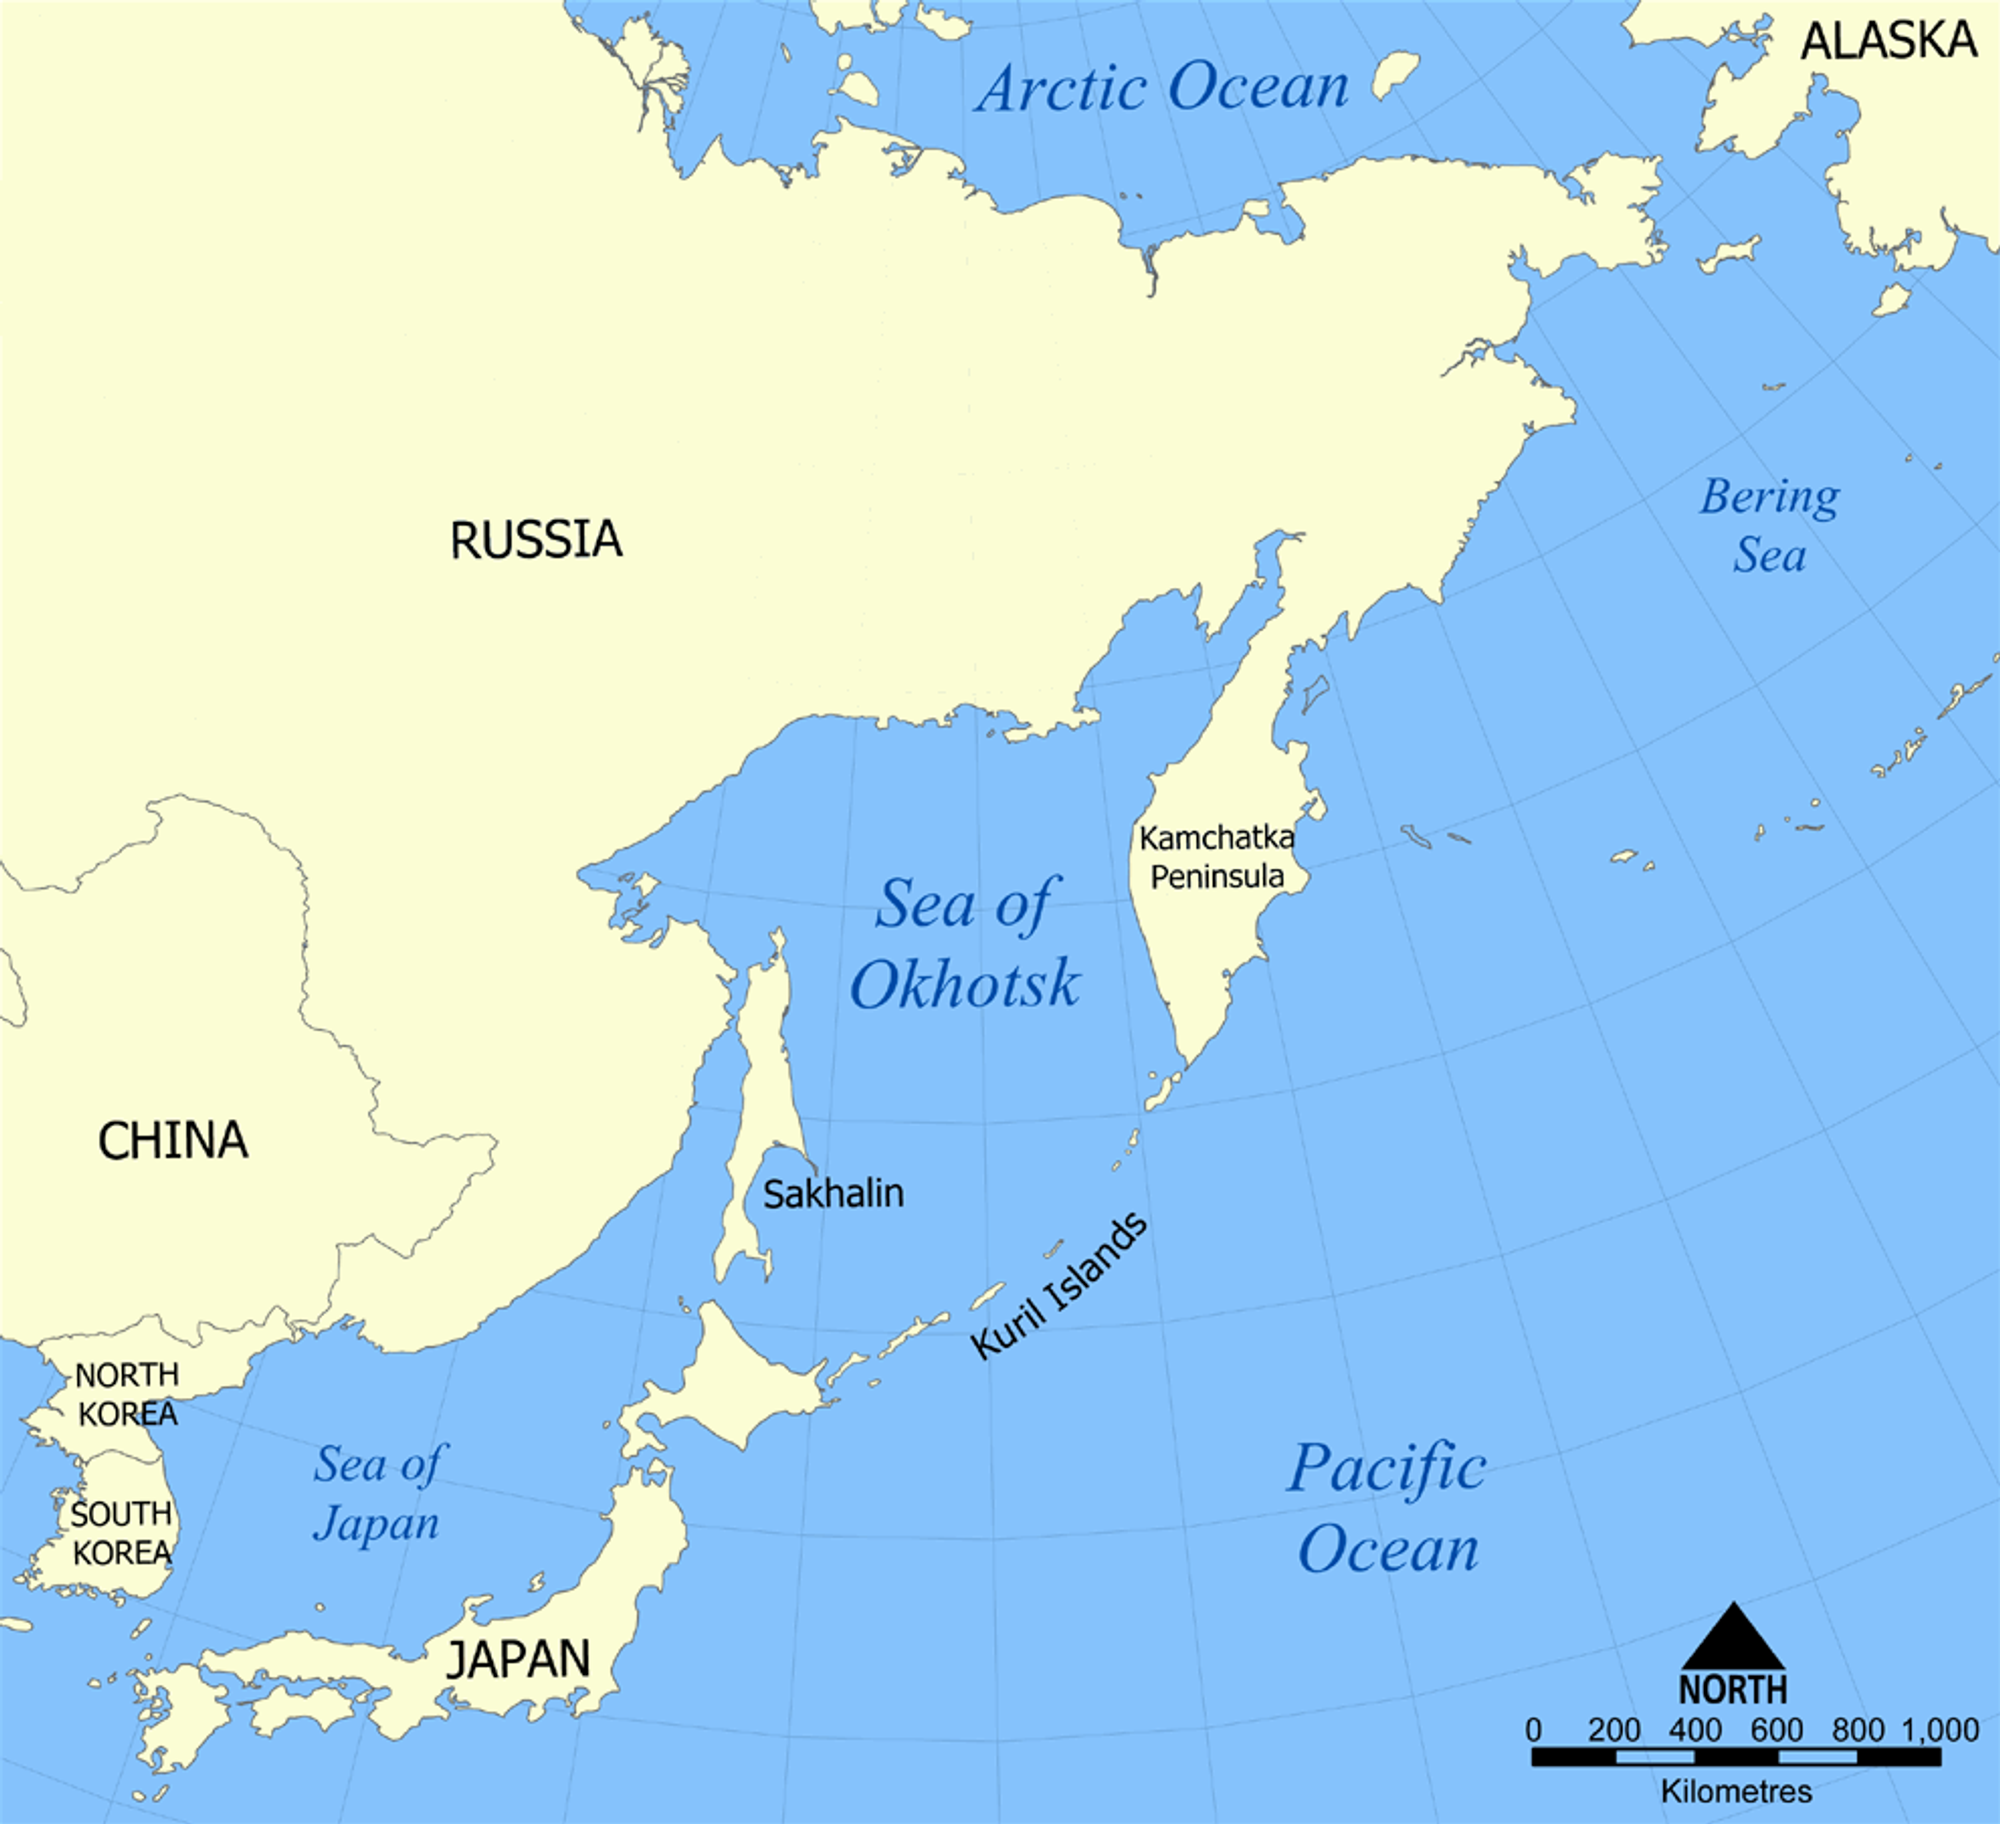 Northeast Asia